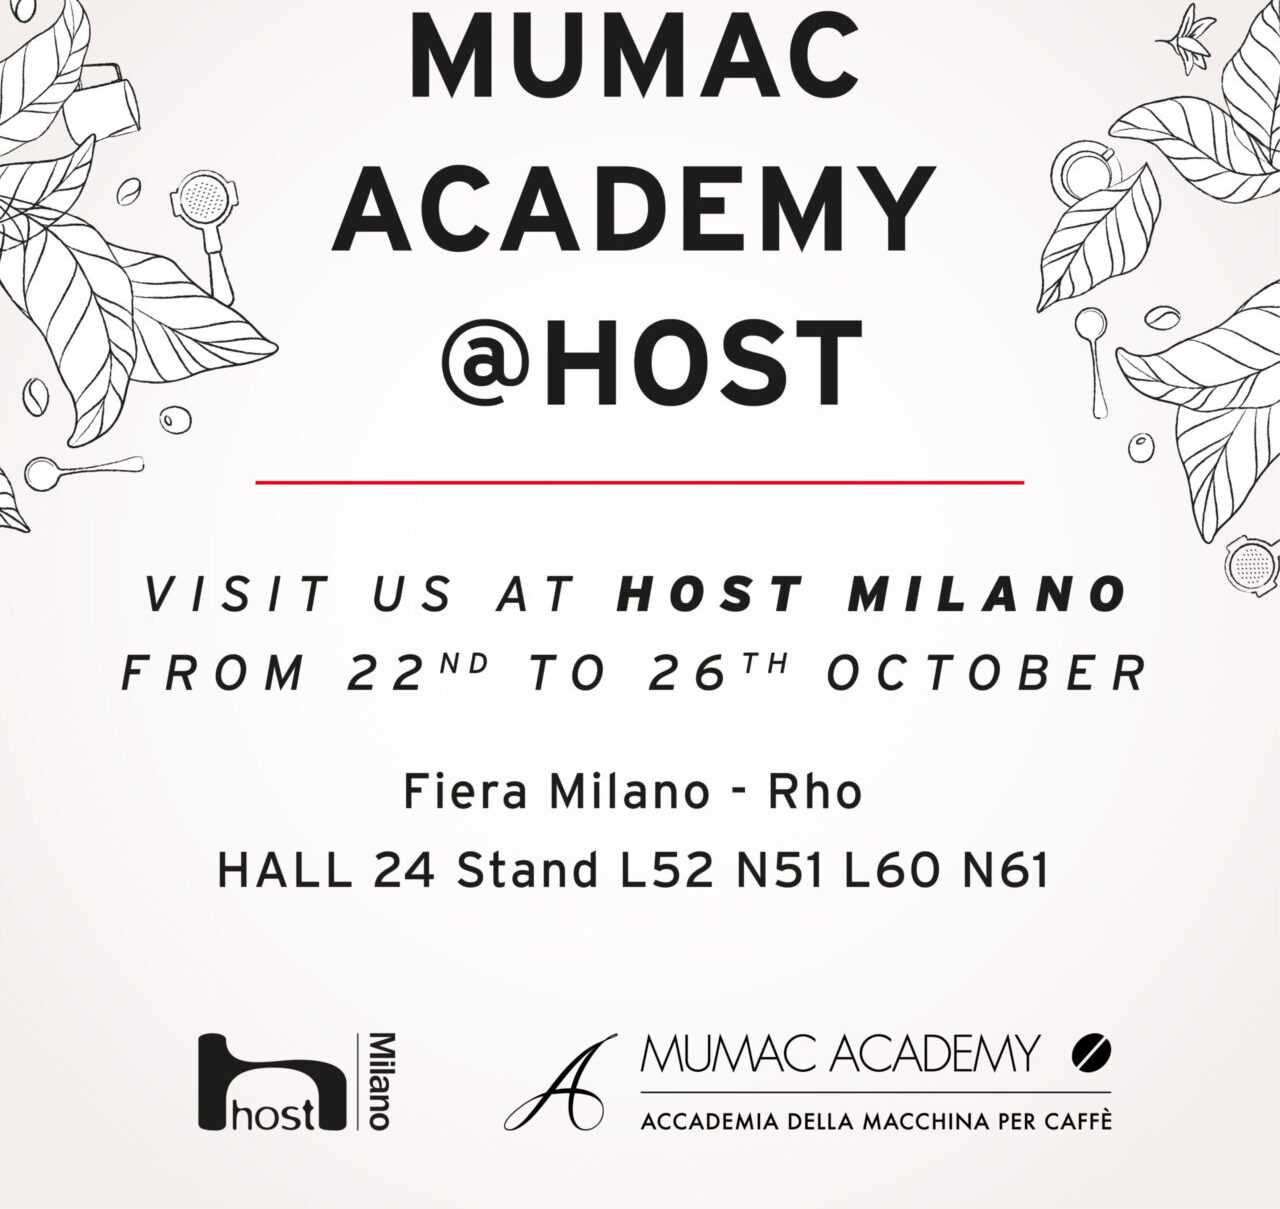 mumac academy